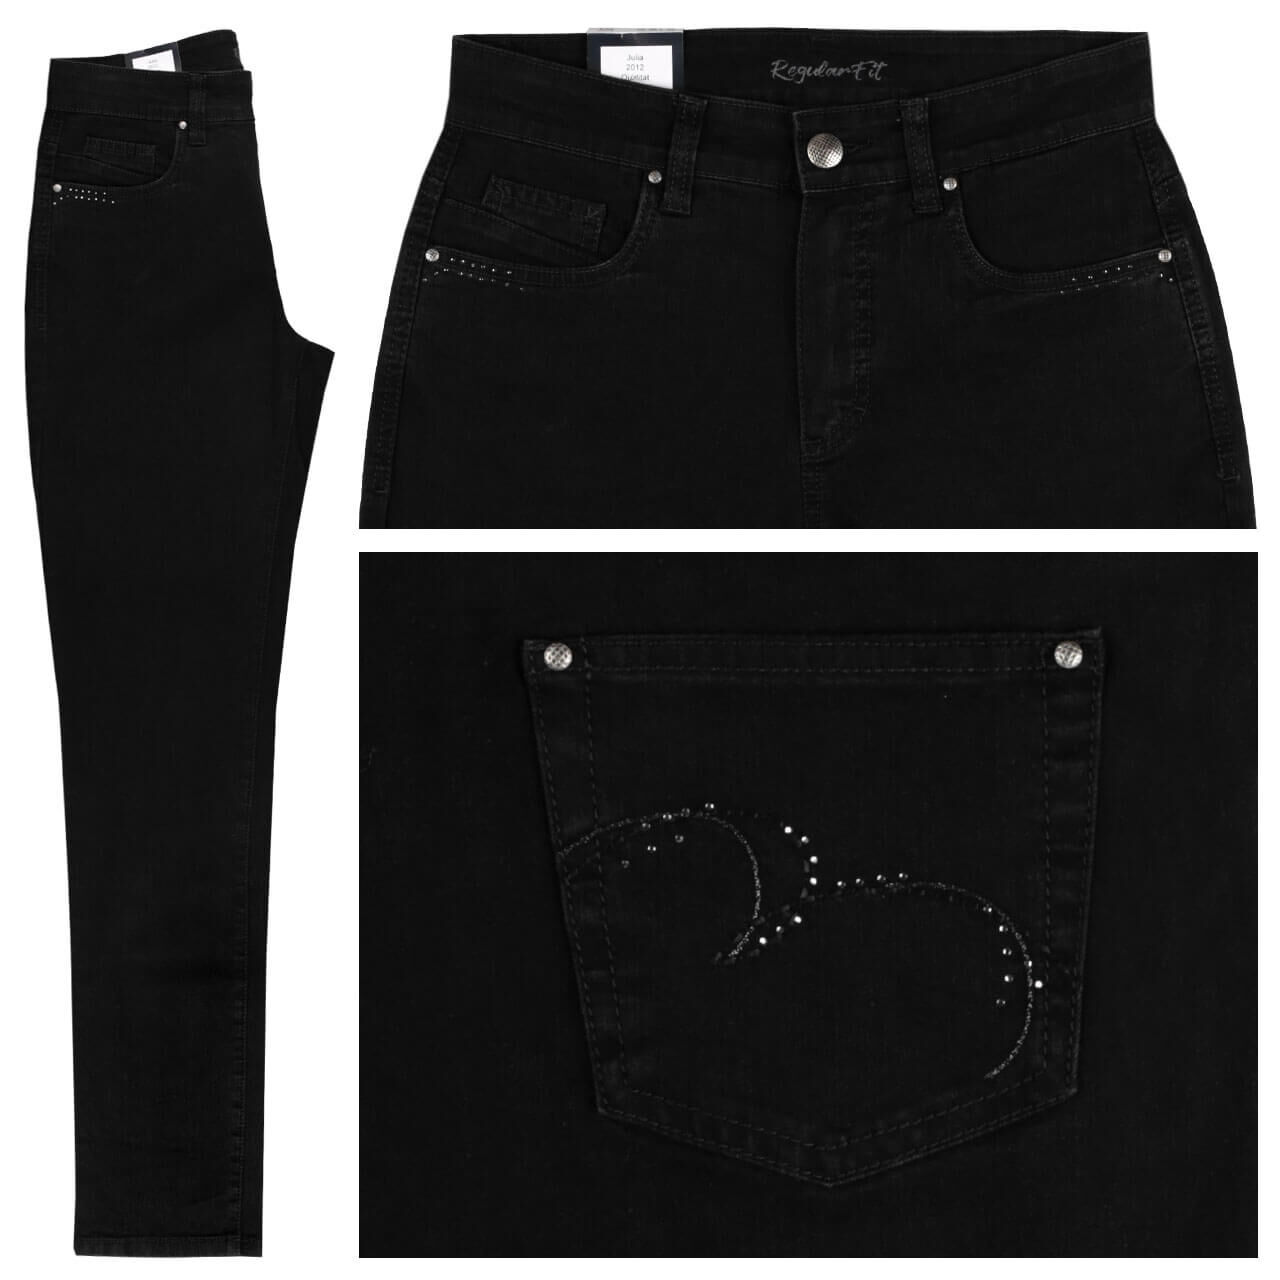 anna montana julia jeans black 48/32 schwarz donna